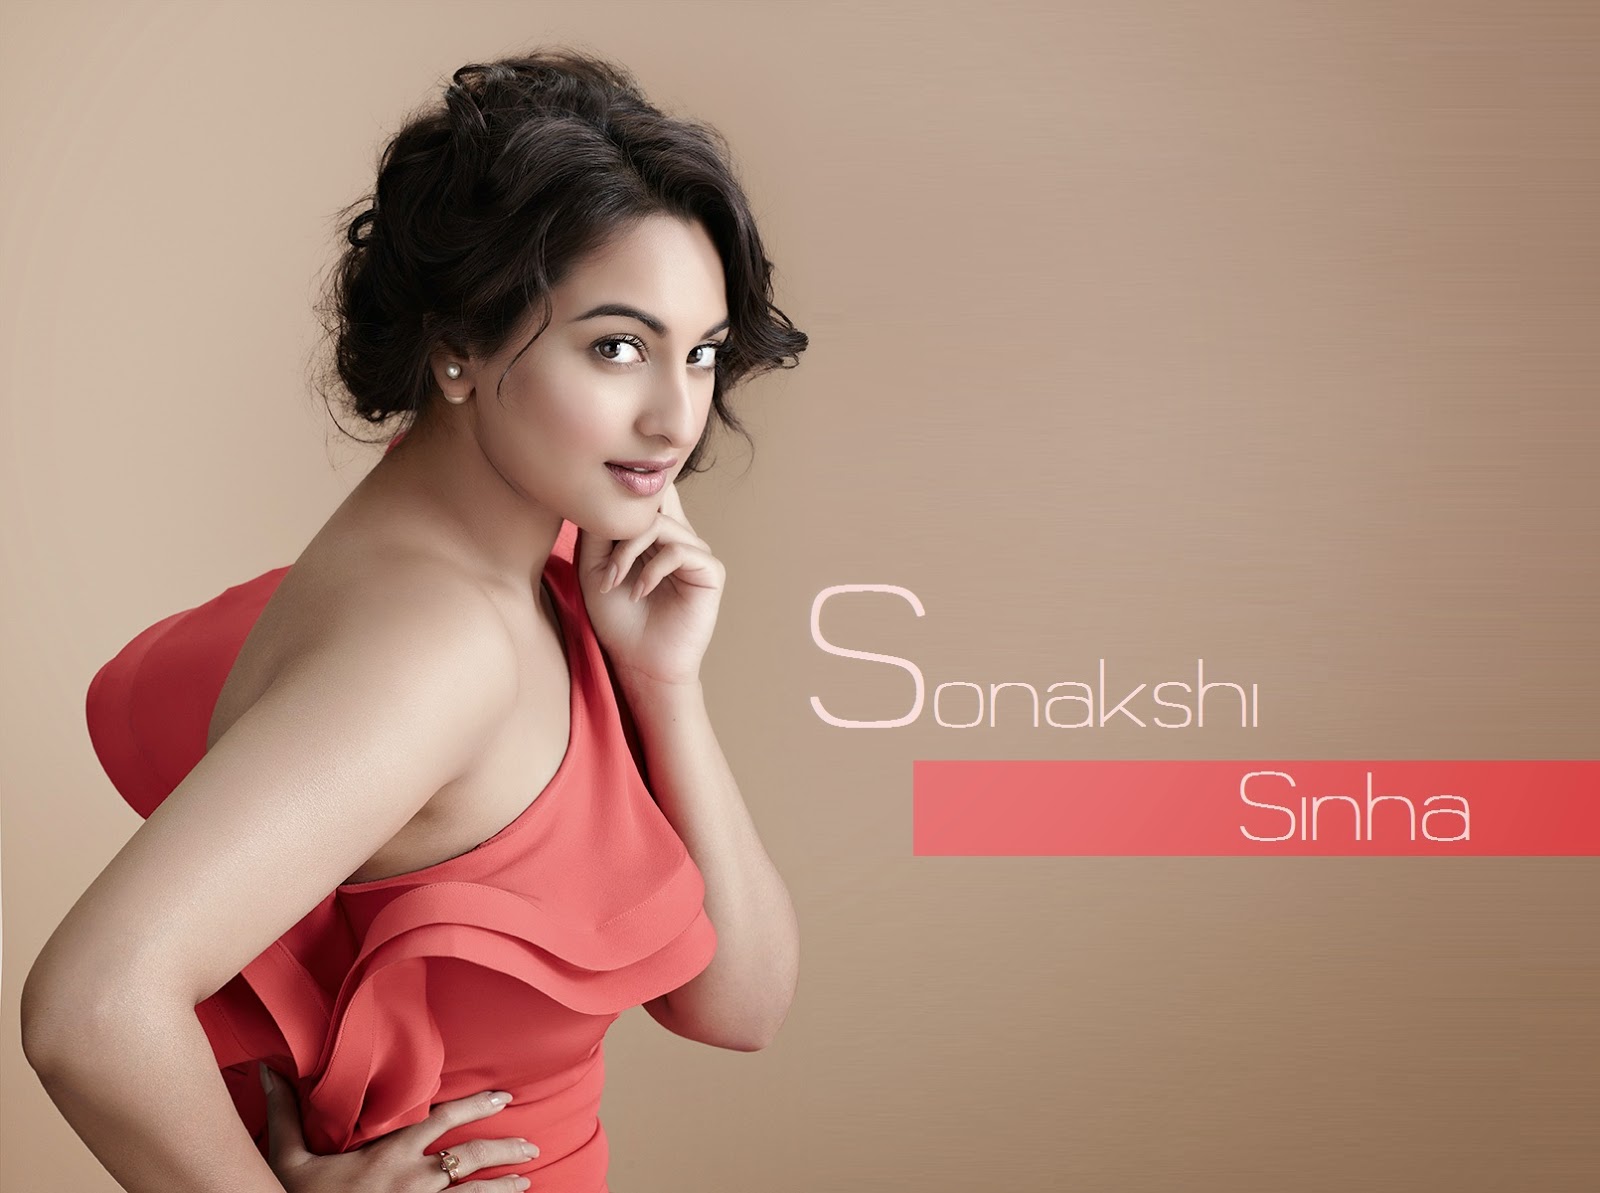 sonakshi sinha hd wallpaper,skin,beauty,shoulder,fashion model,lip